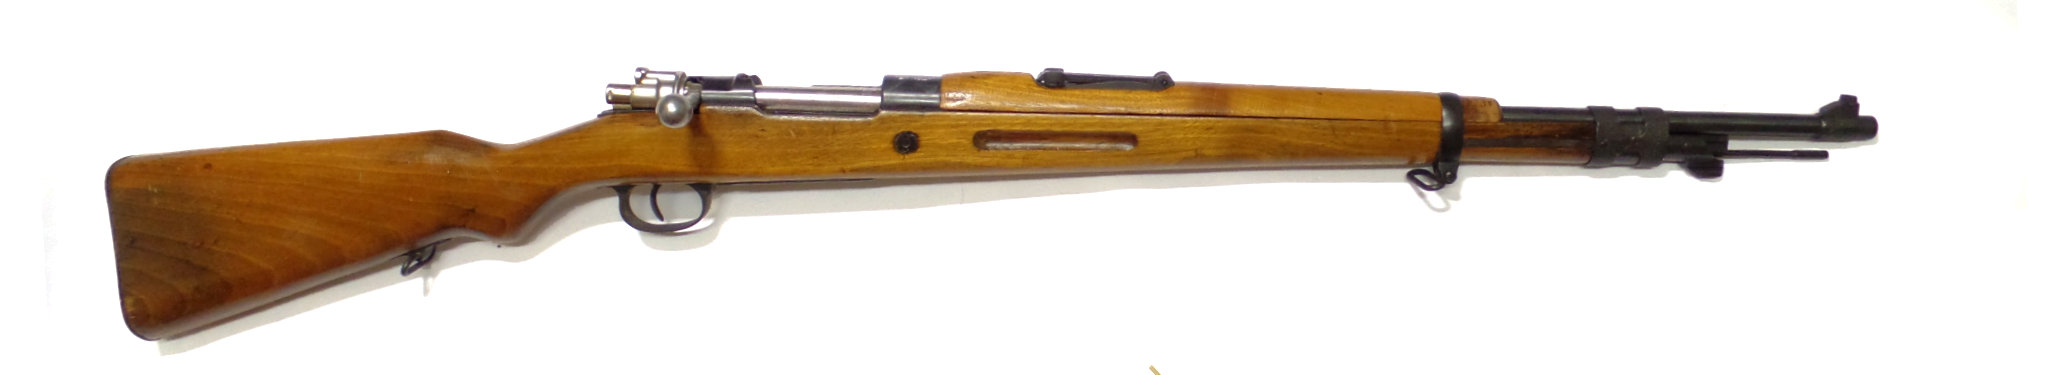 LA CORUNA 98K calibre 8x57IS